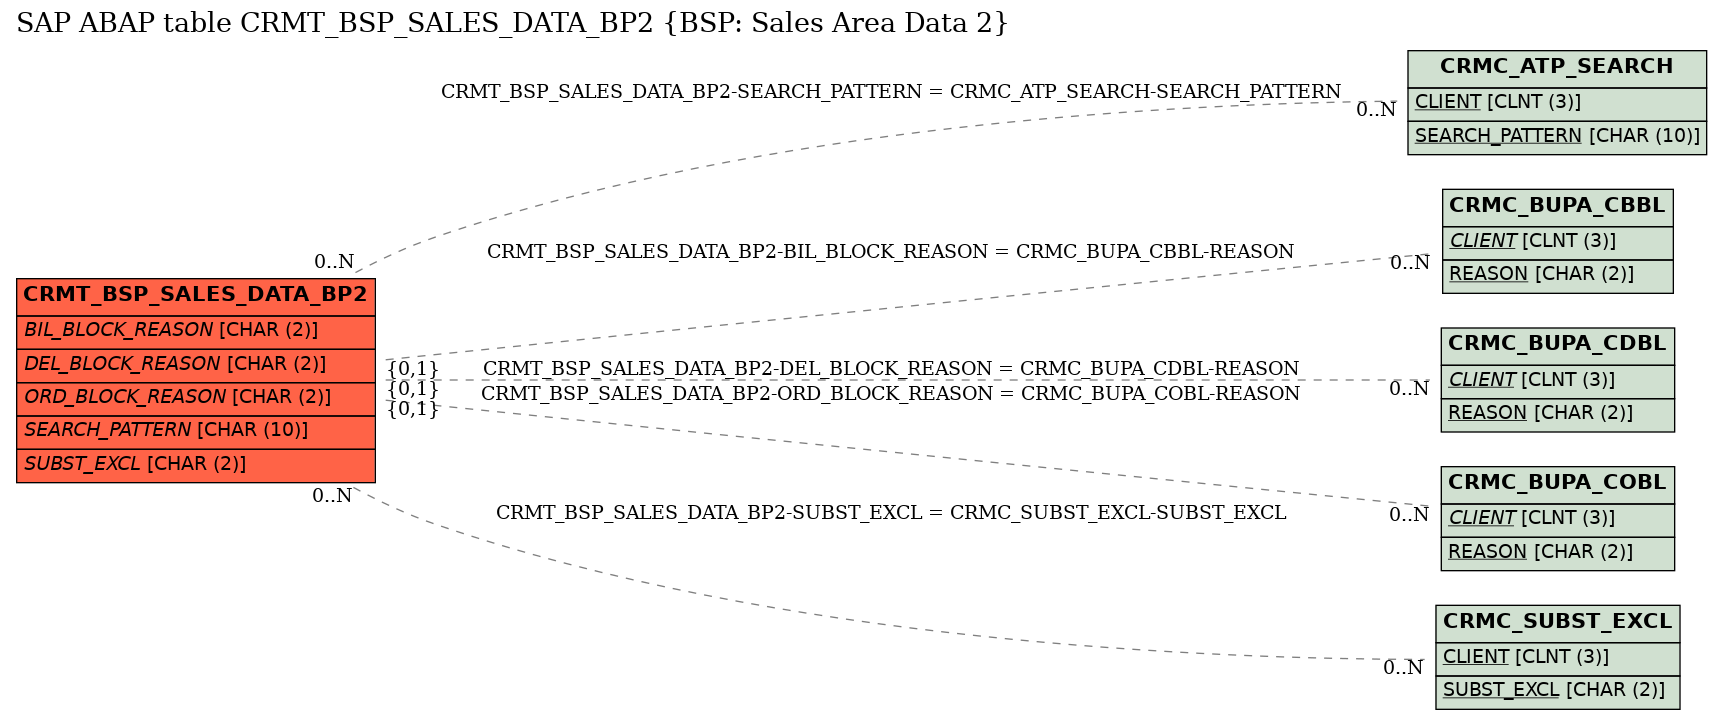 E-R Diagram for table CRMT_BSP_SALES_DATA_BP2 (BSP: Sales Area Data 2)